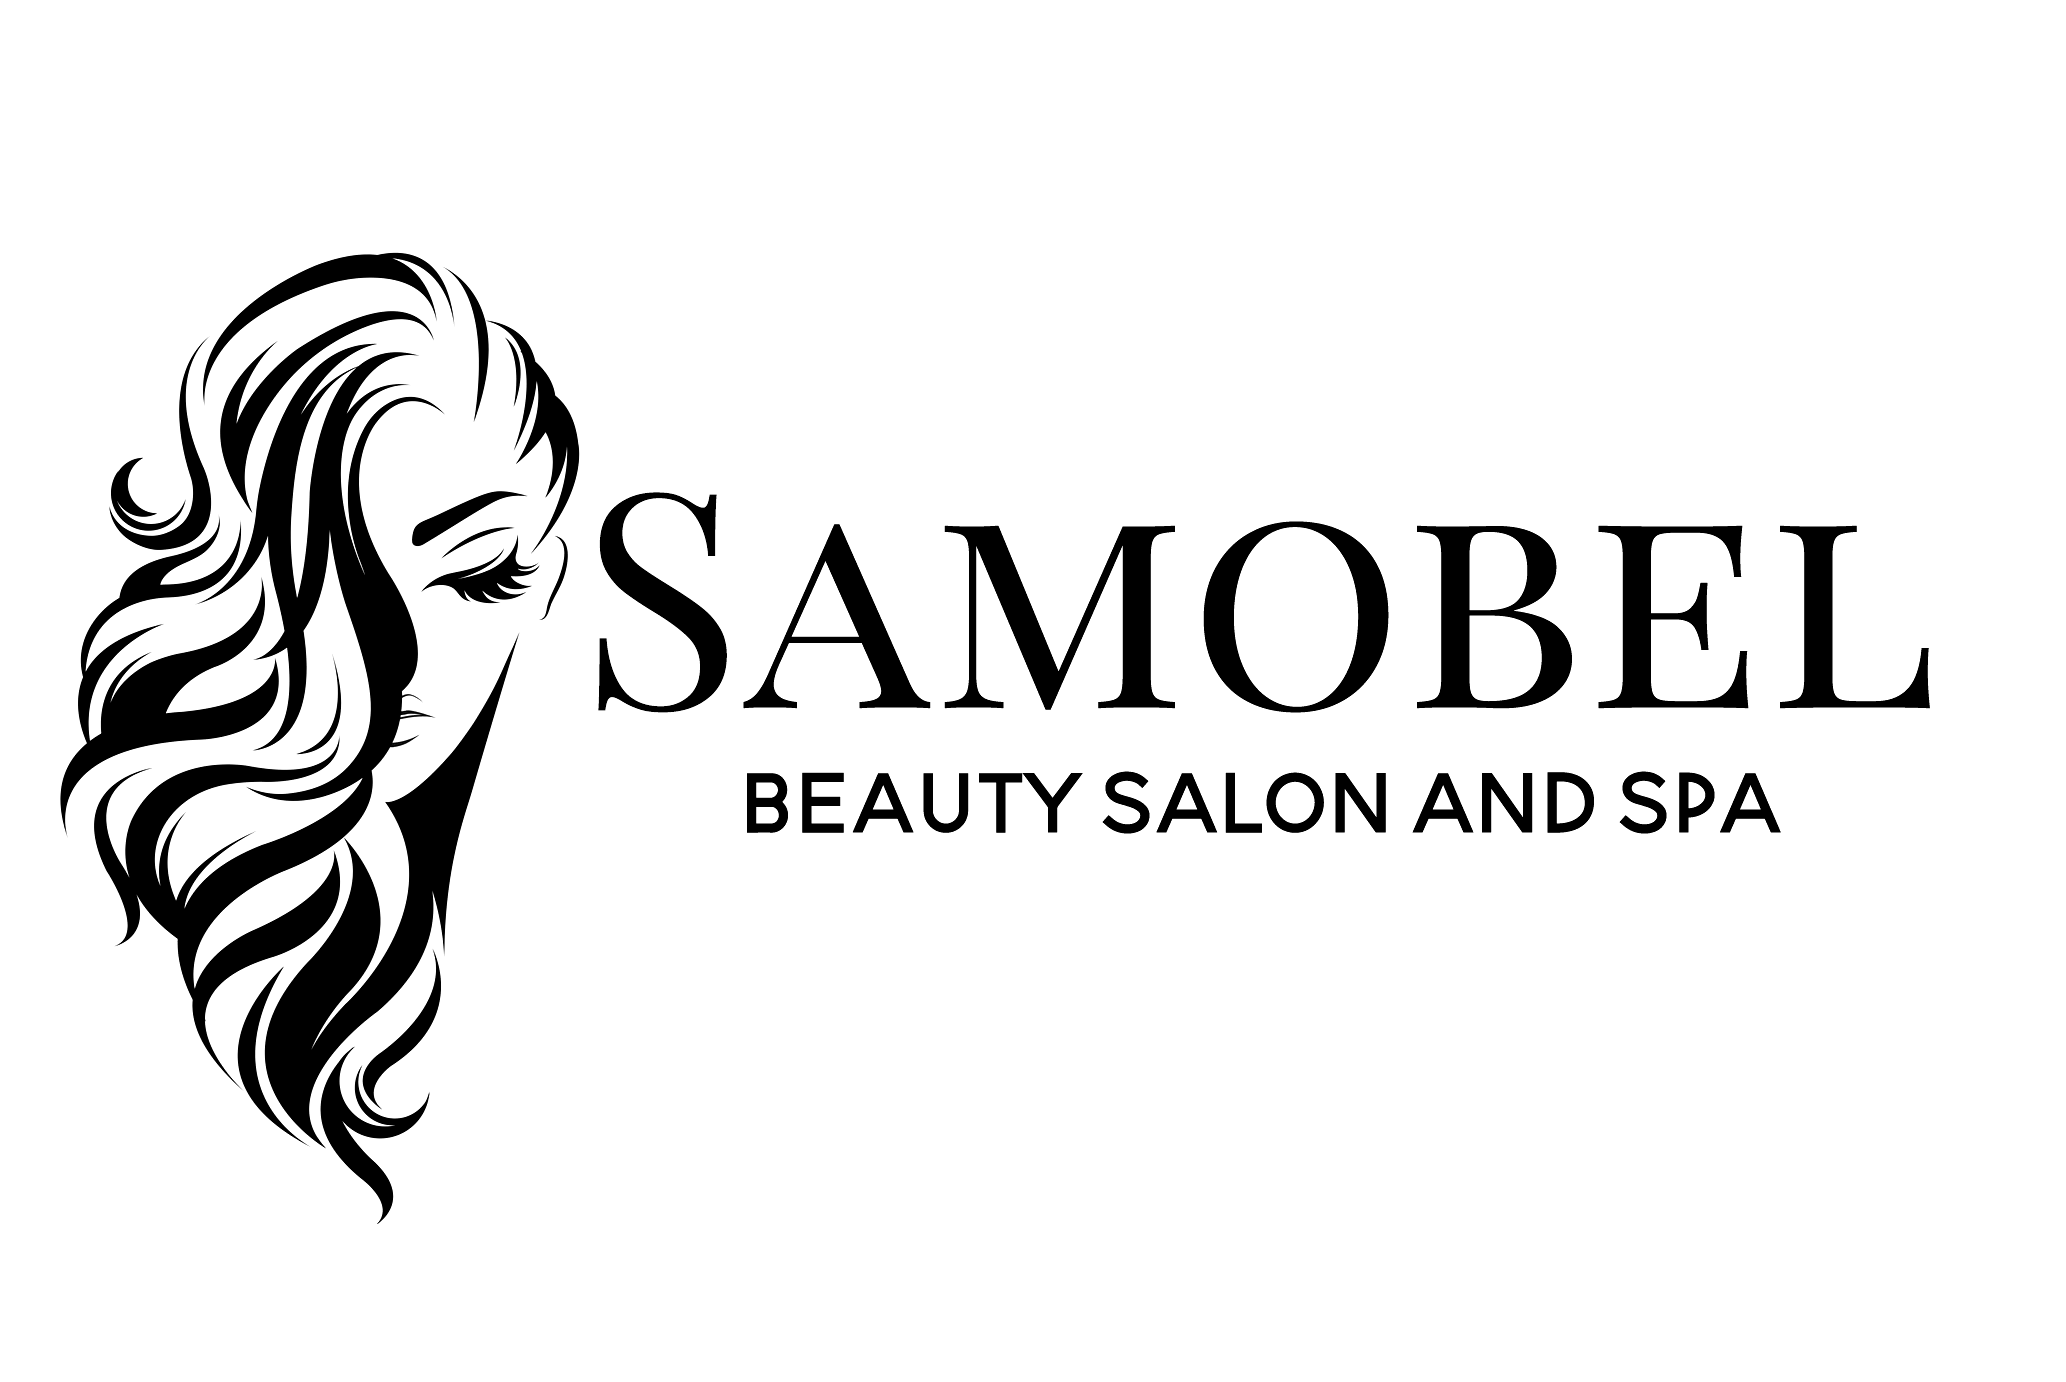 samobel logo clear bg